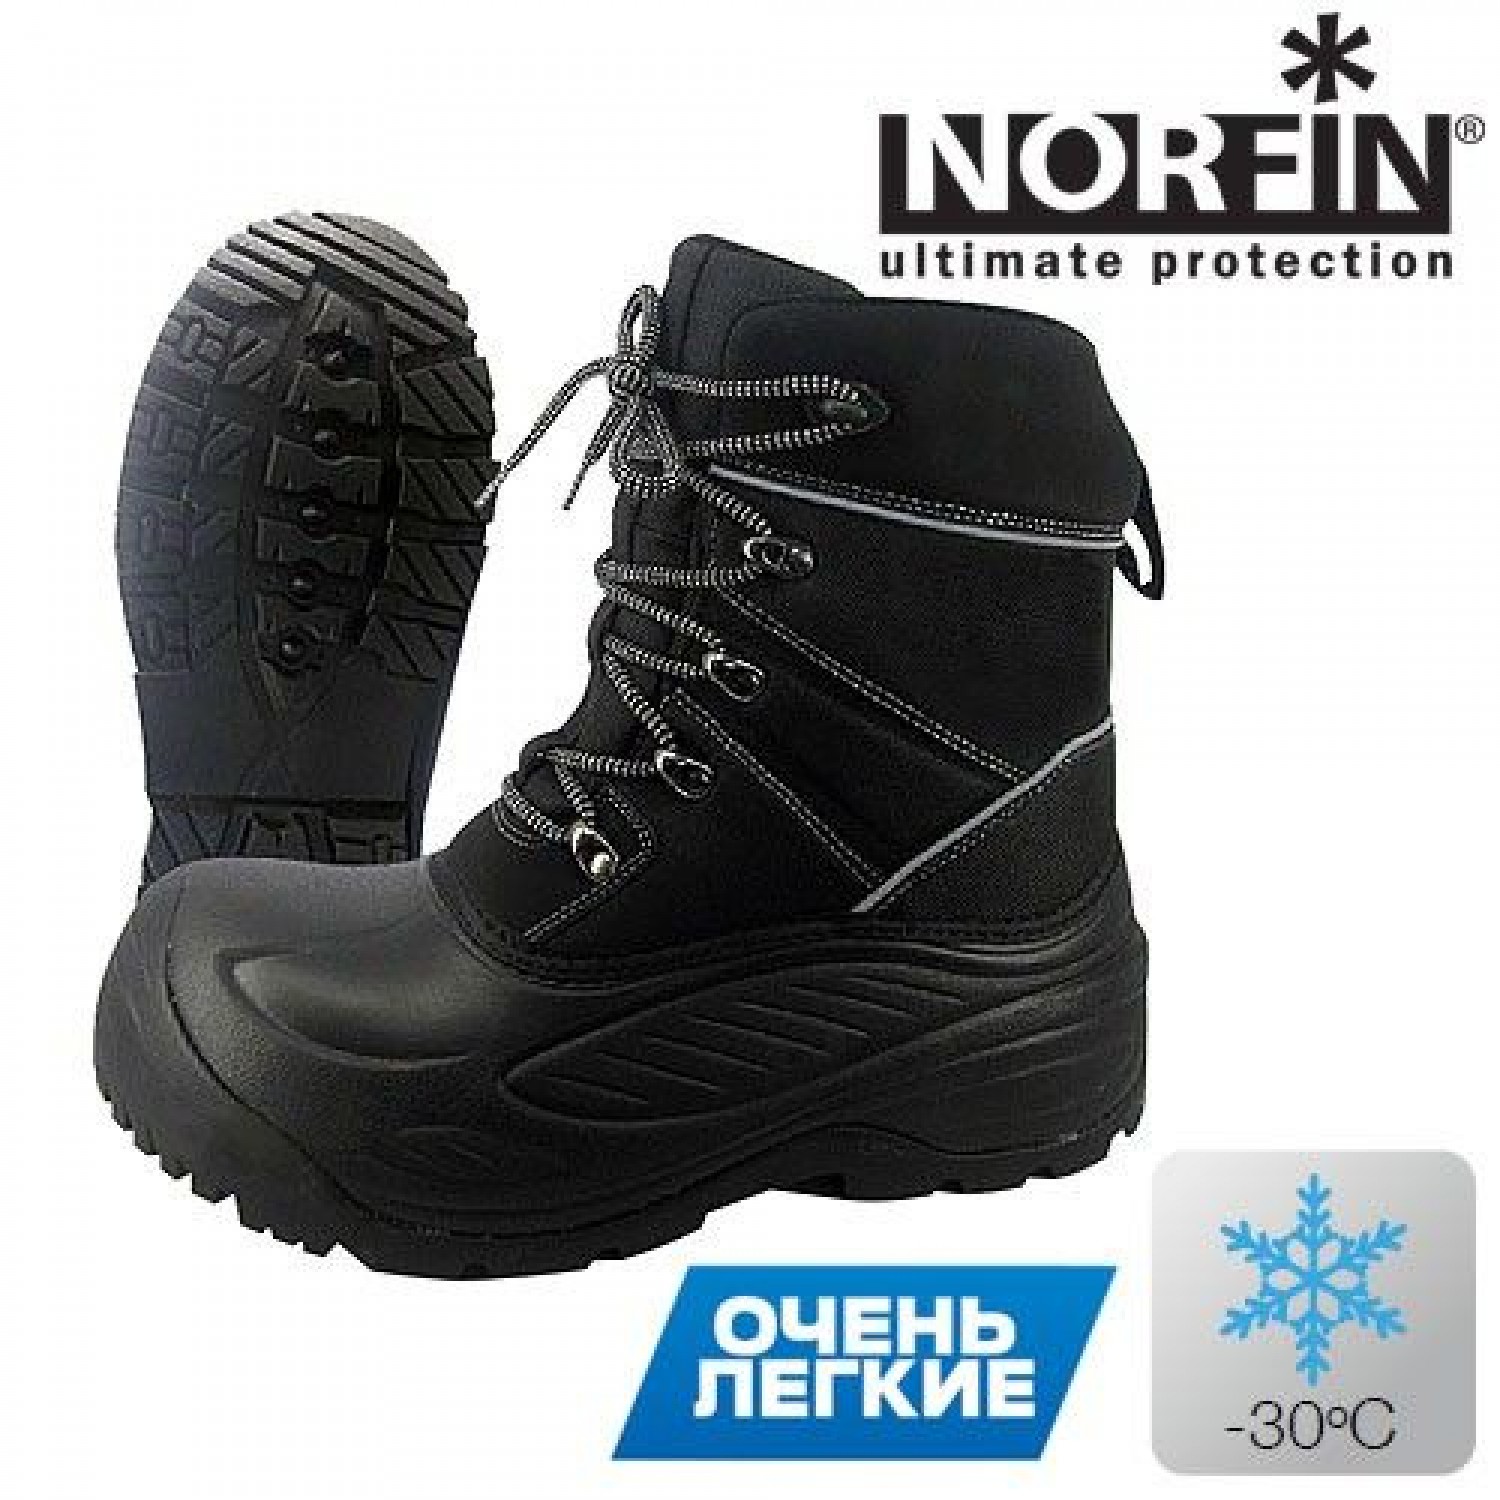 Покупка Ботинки зимние NORFIN Discovery в Минске Беларуси